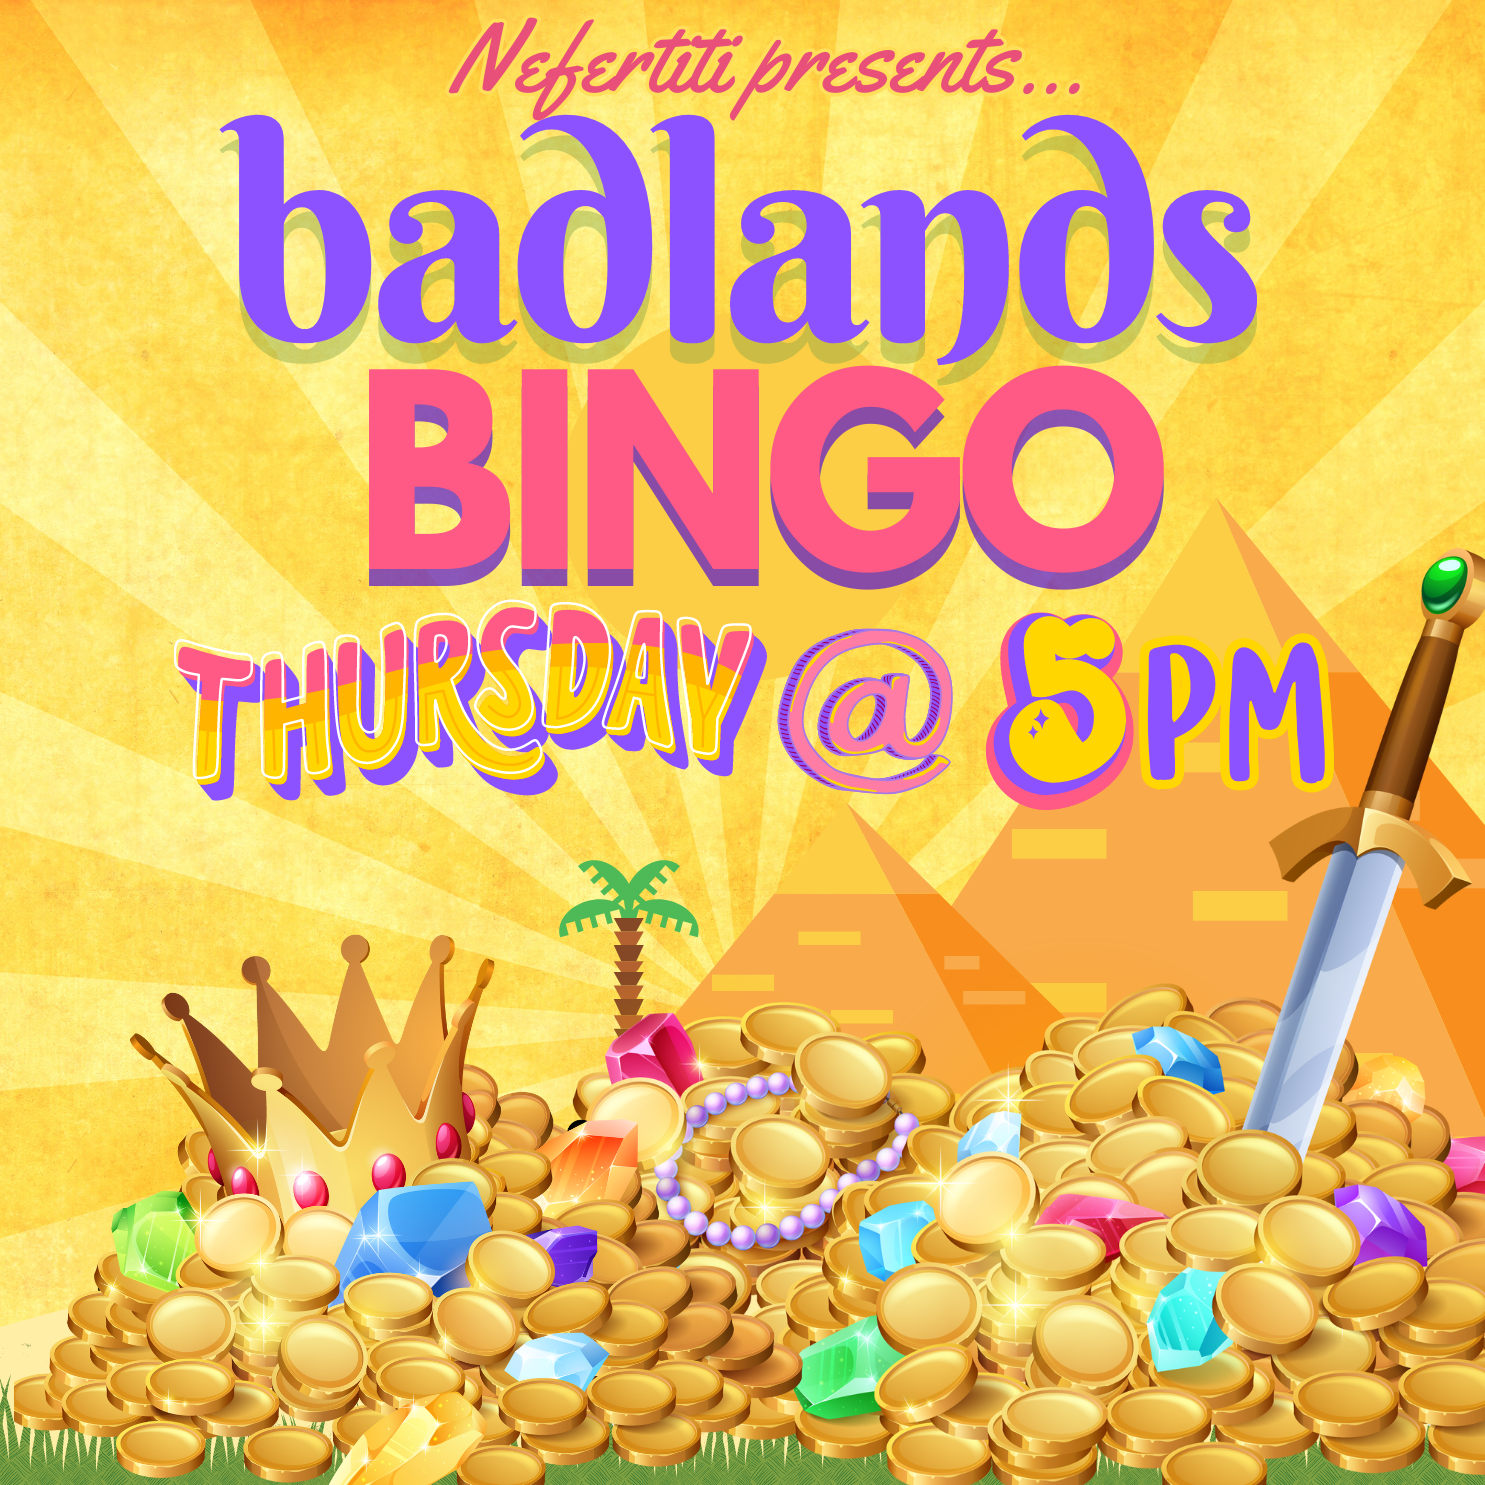 BADLANDS BINGO! a free community event with prizes!